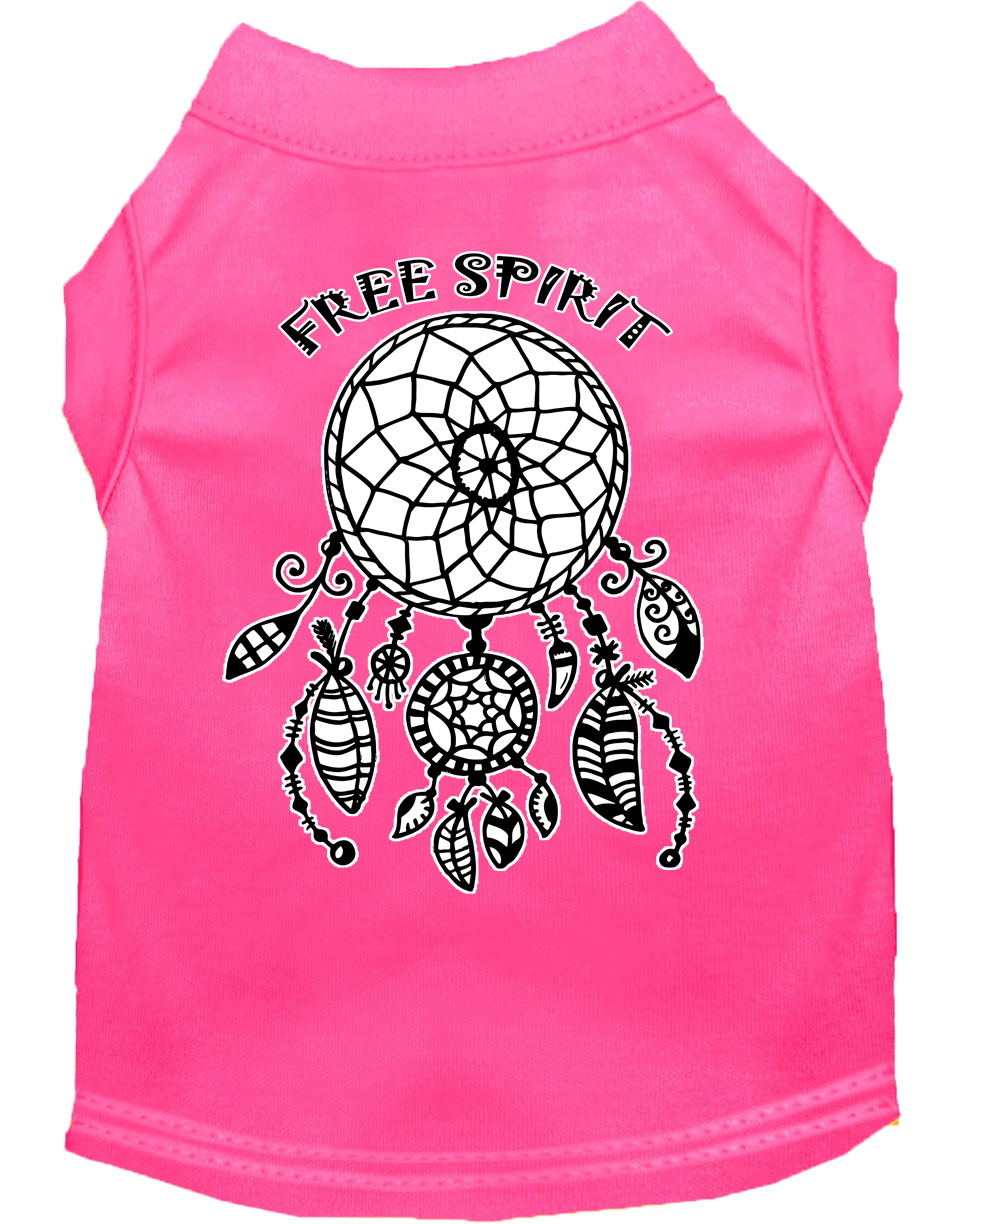 Free Spirit Screen Print Dog Shirt Bright Pink Med